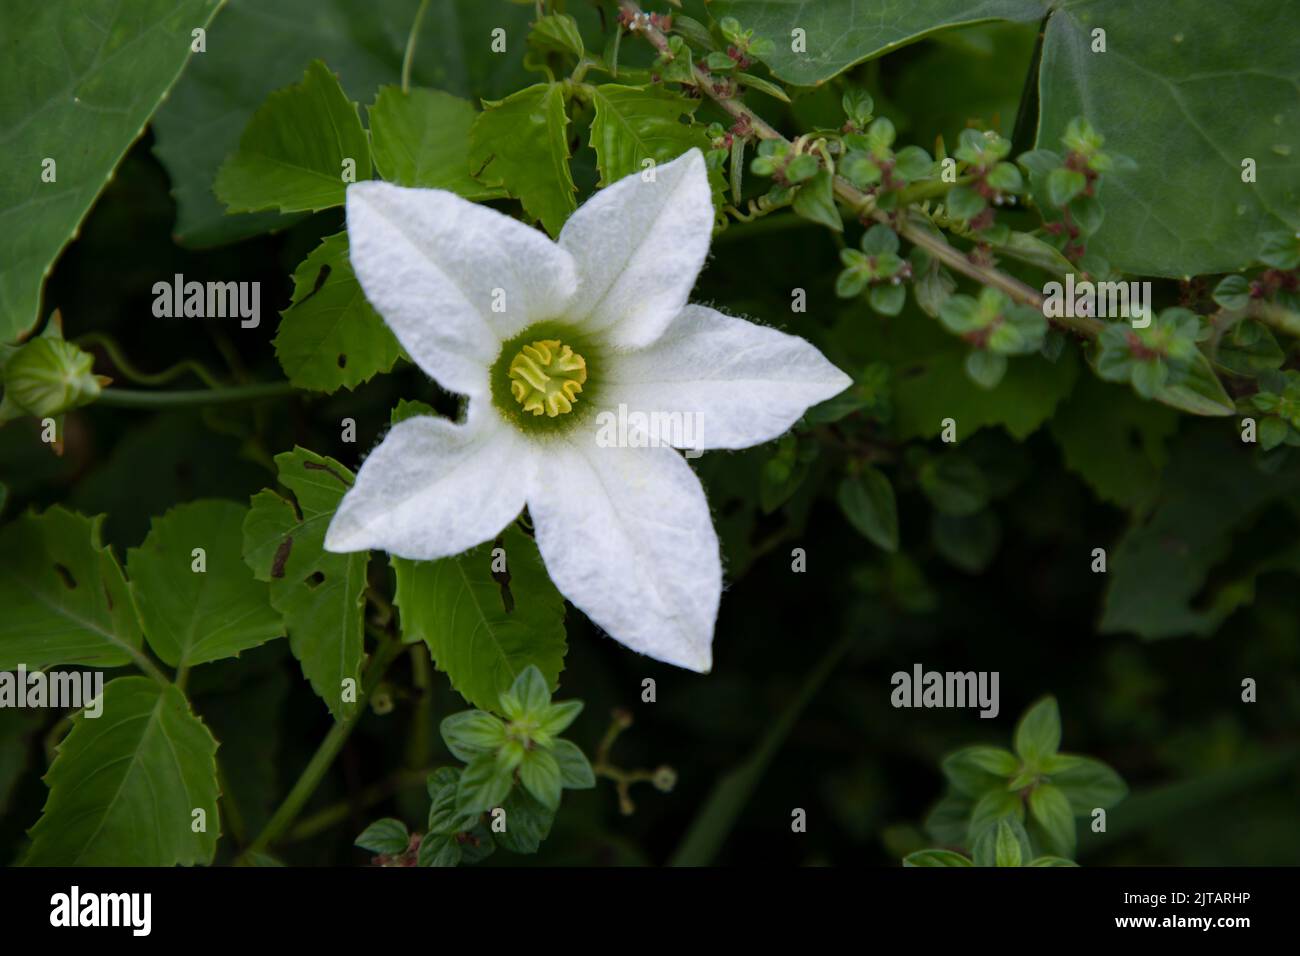 Ivy gourd (scientific name: Coccinia grandis) white flower Stock Photo